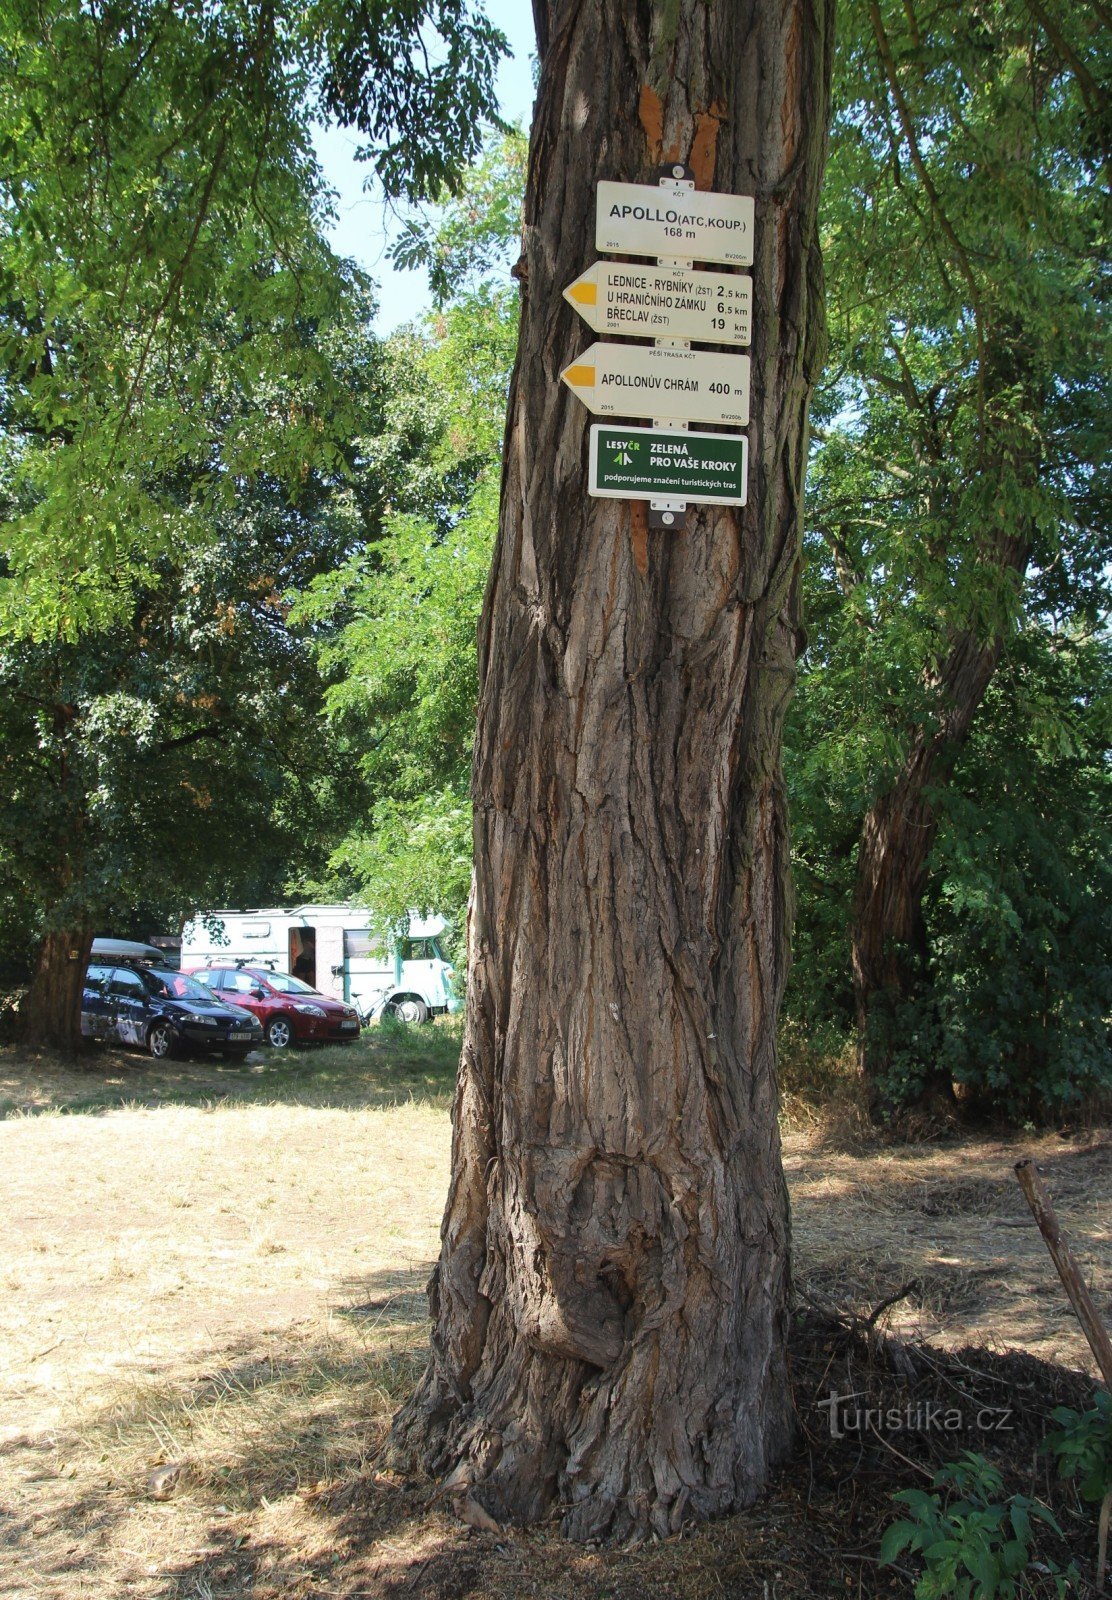 Туристическая развязка Apollo расположена на краю парковки.